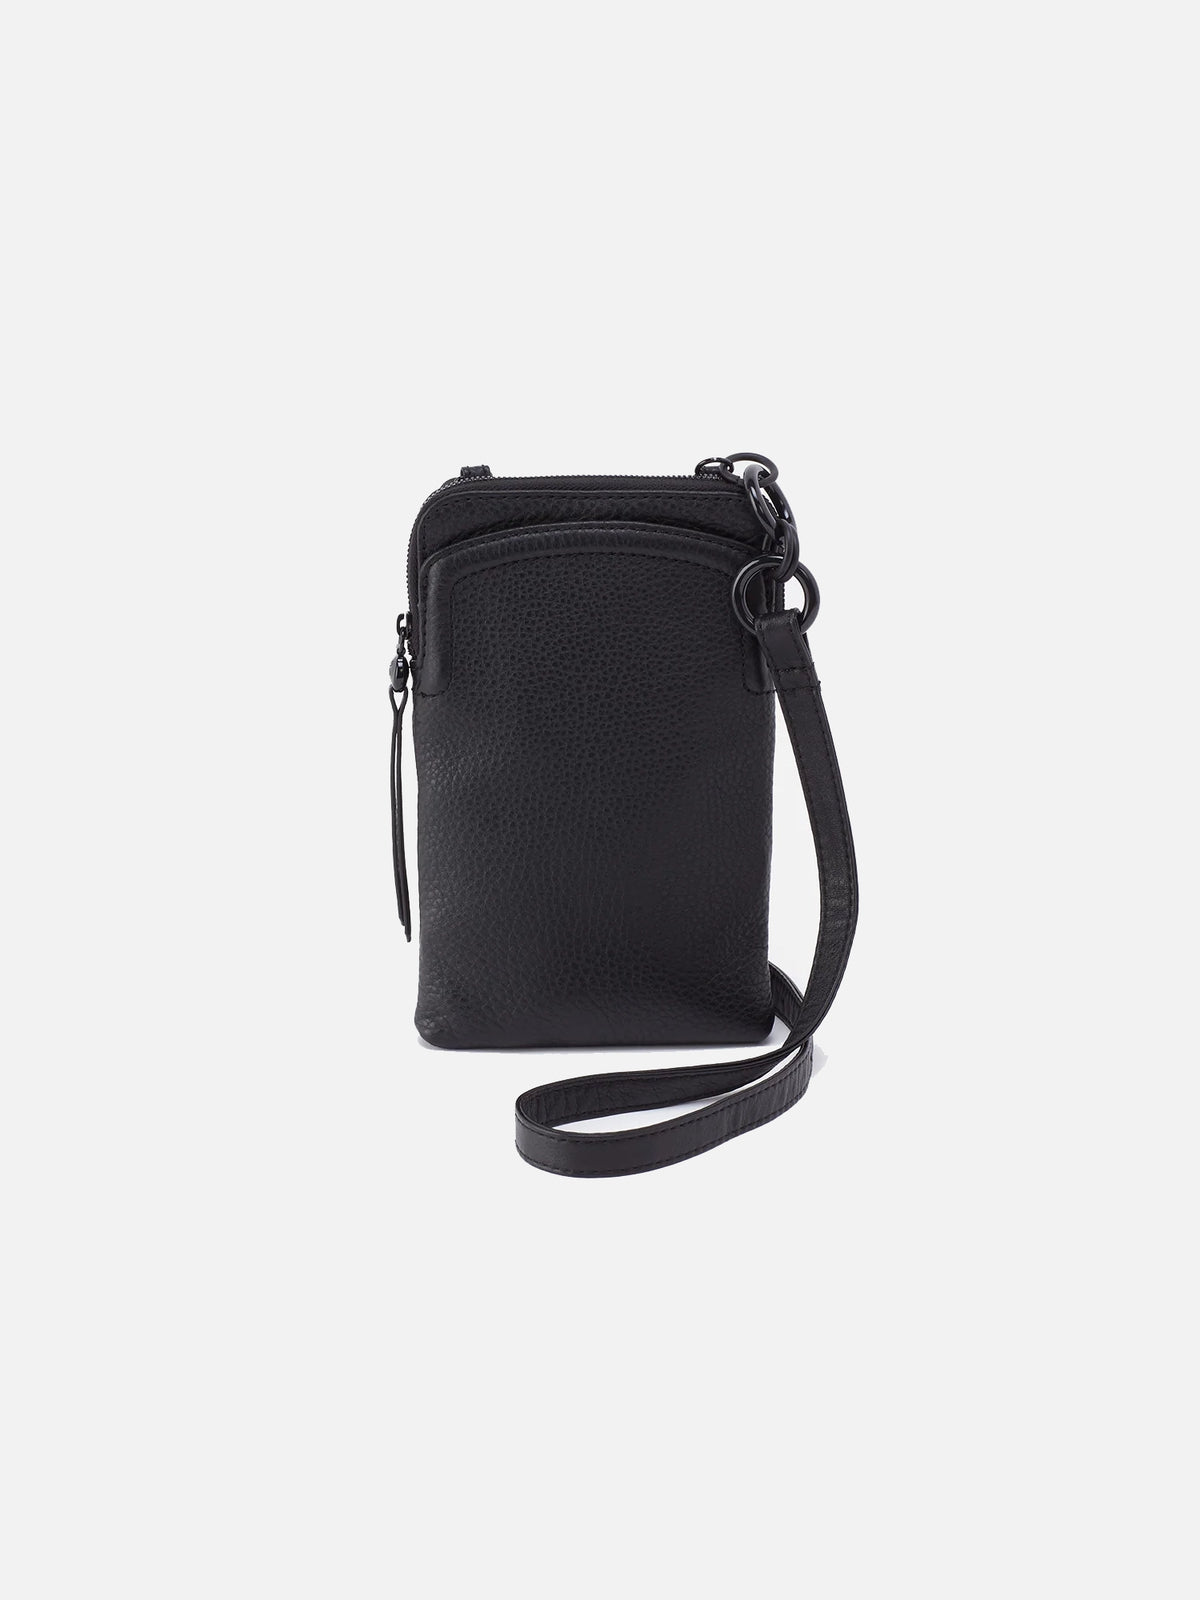 hobo nila phone crossbody bag in black pebbled leather